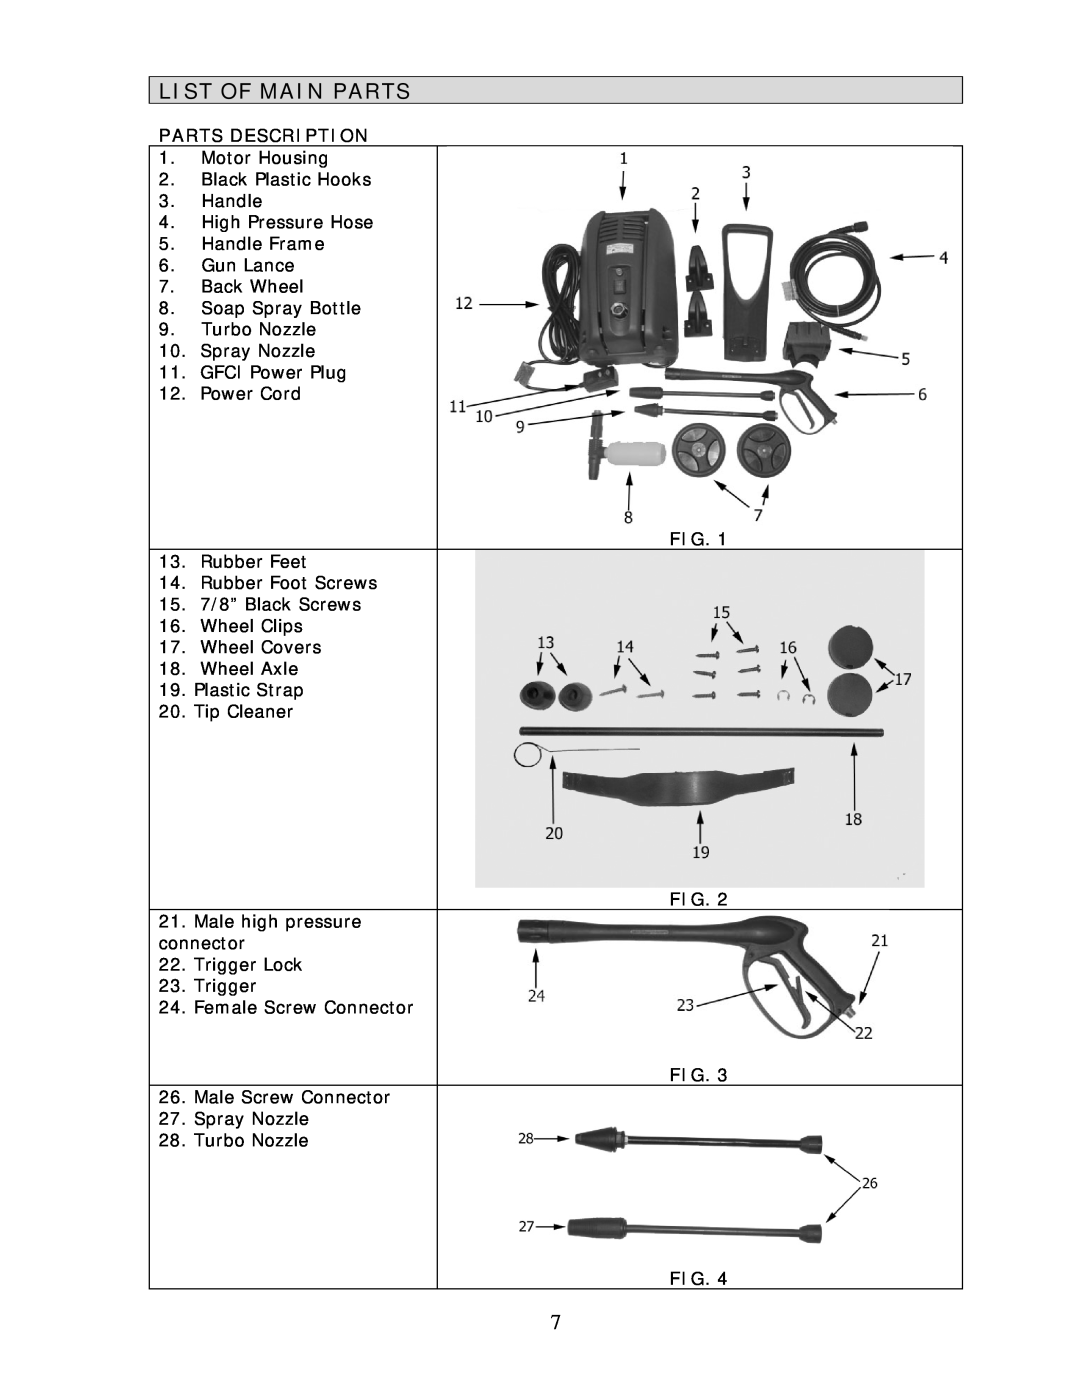 Wachsmuth & Krogmann QL-3100B manual List Of Main Parts, Parts Description 